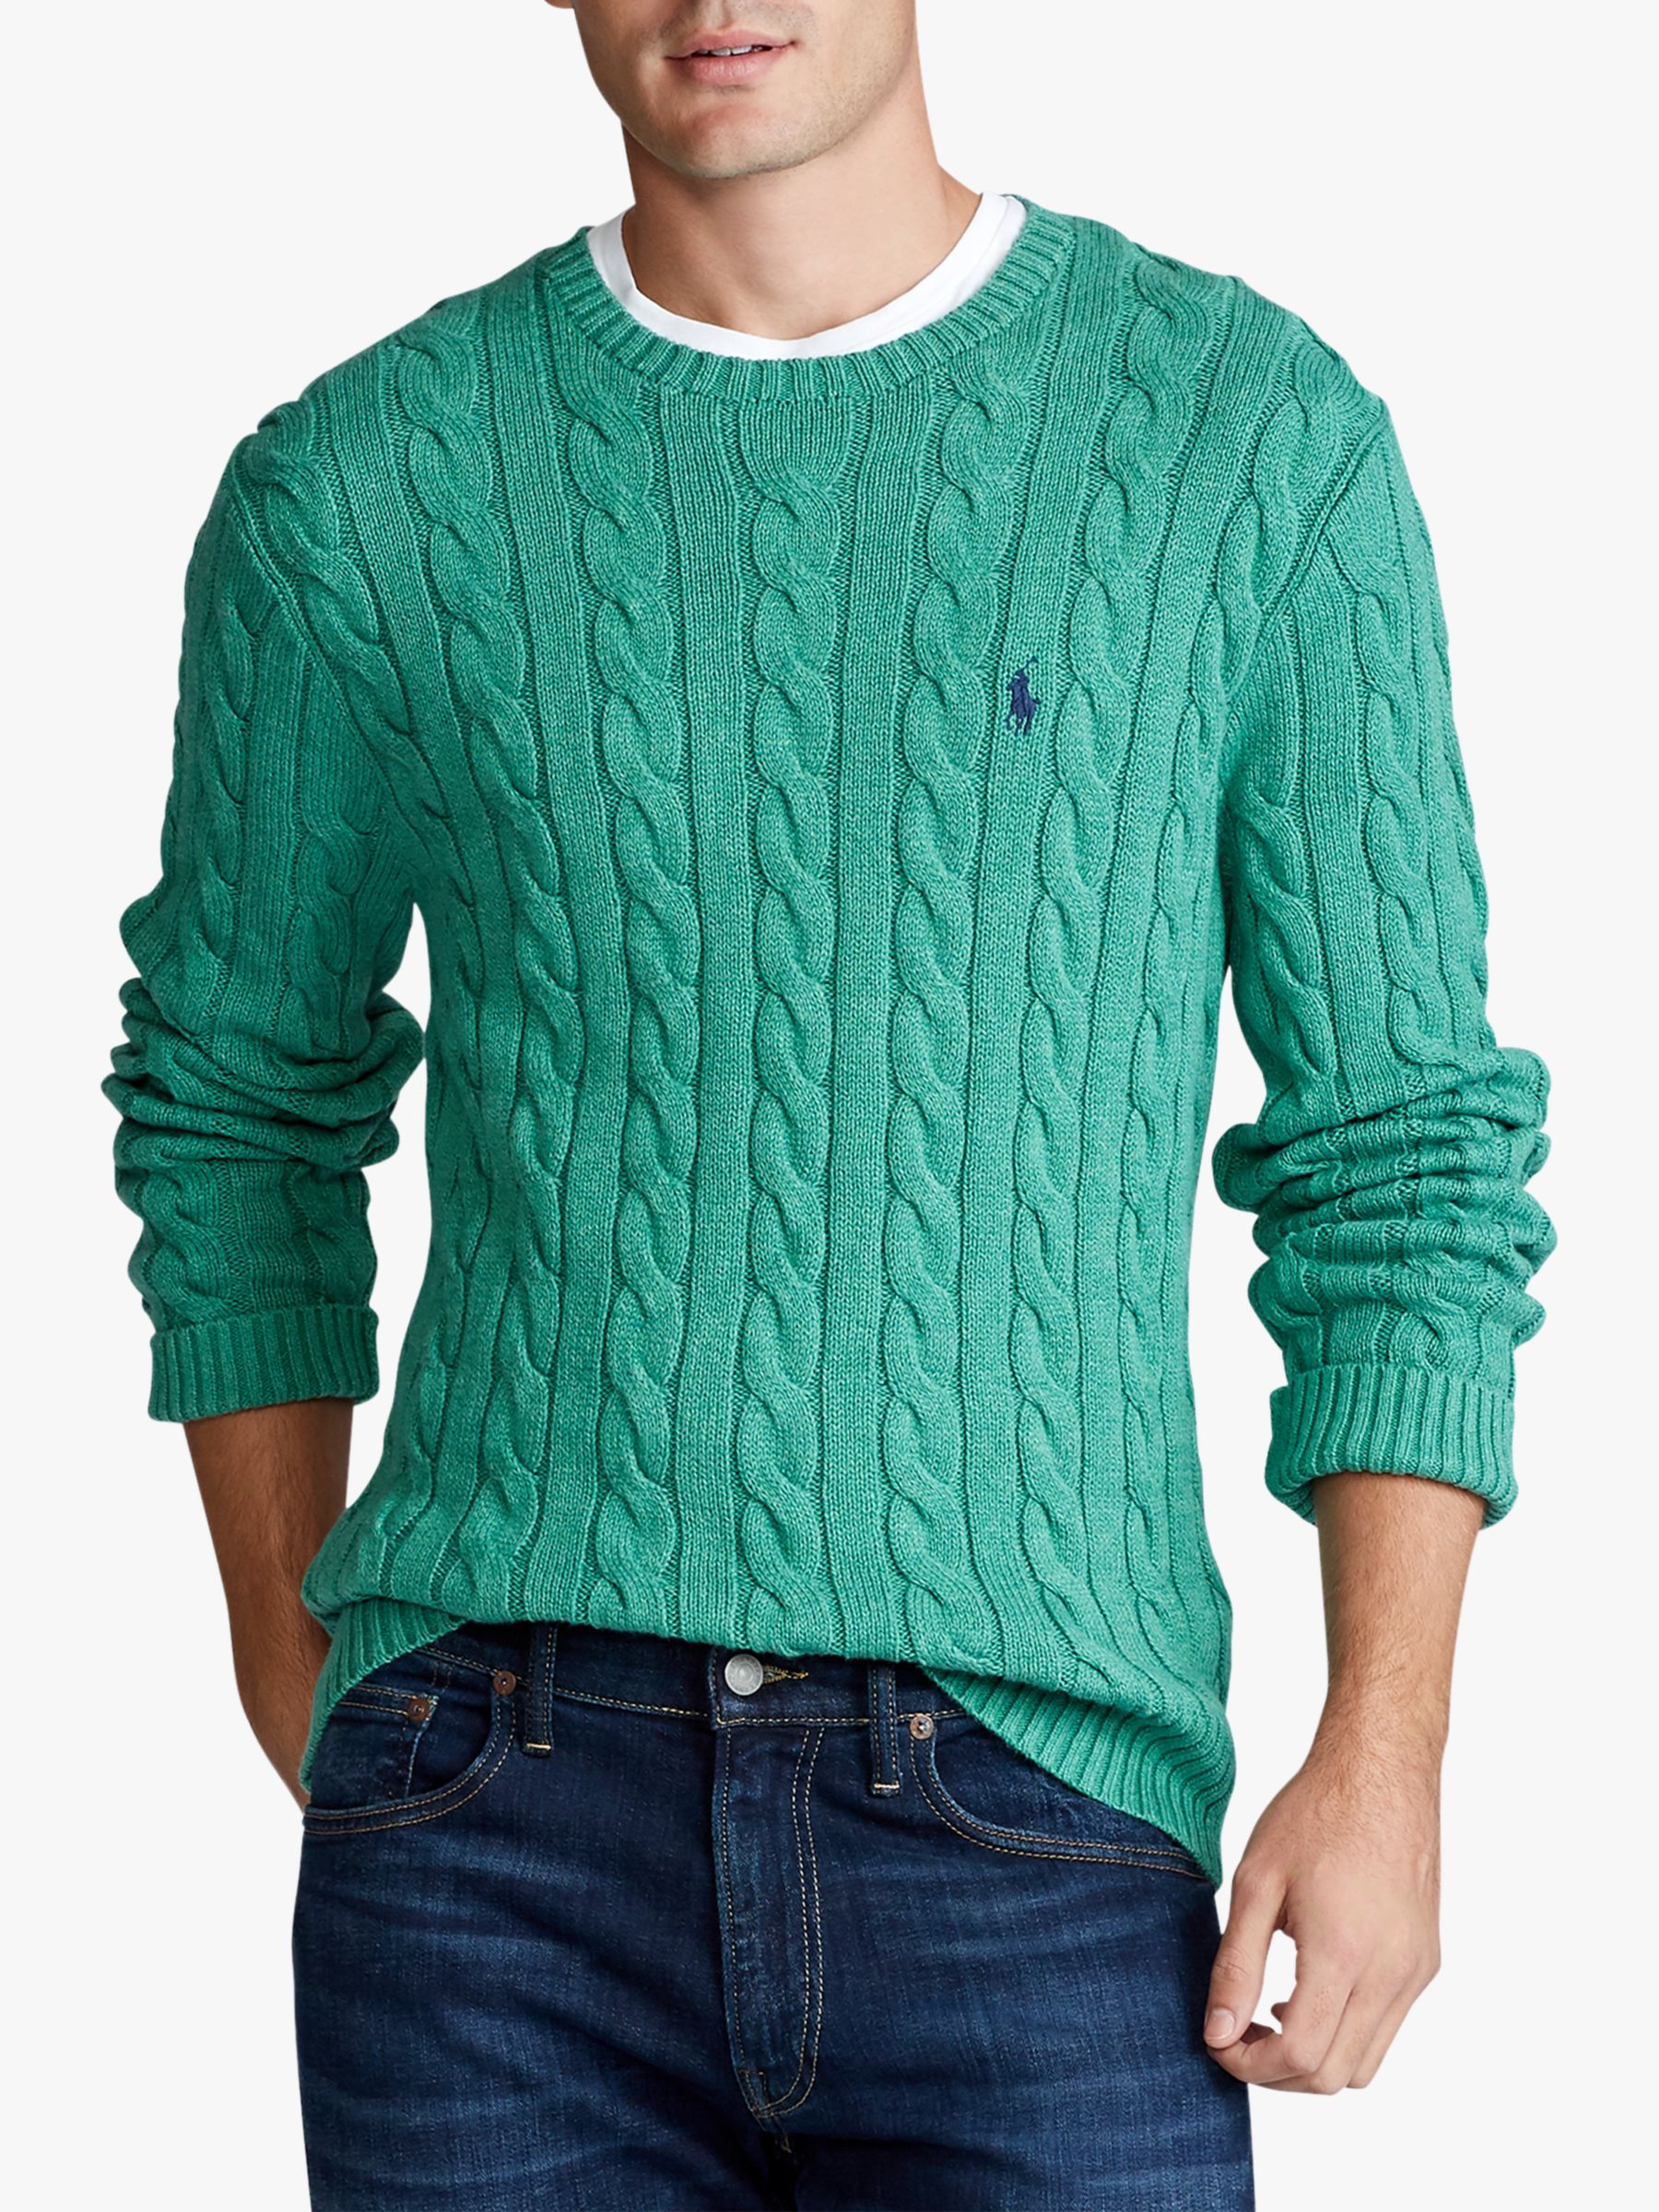 Polo Ralph Lauren Cable Knit Cotton Sweater